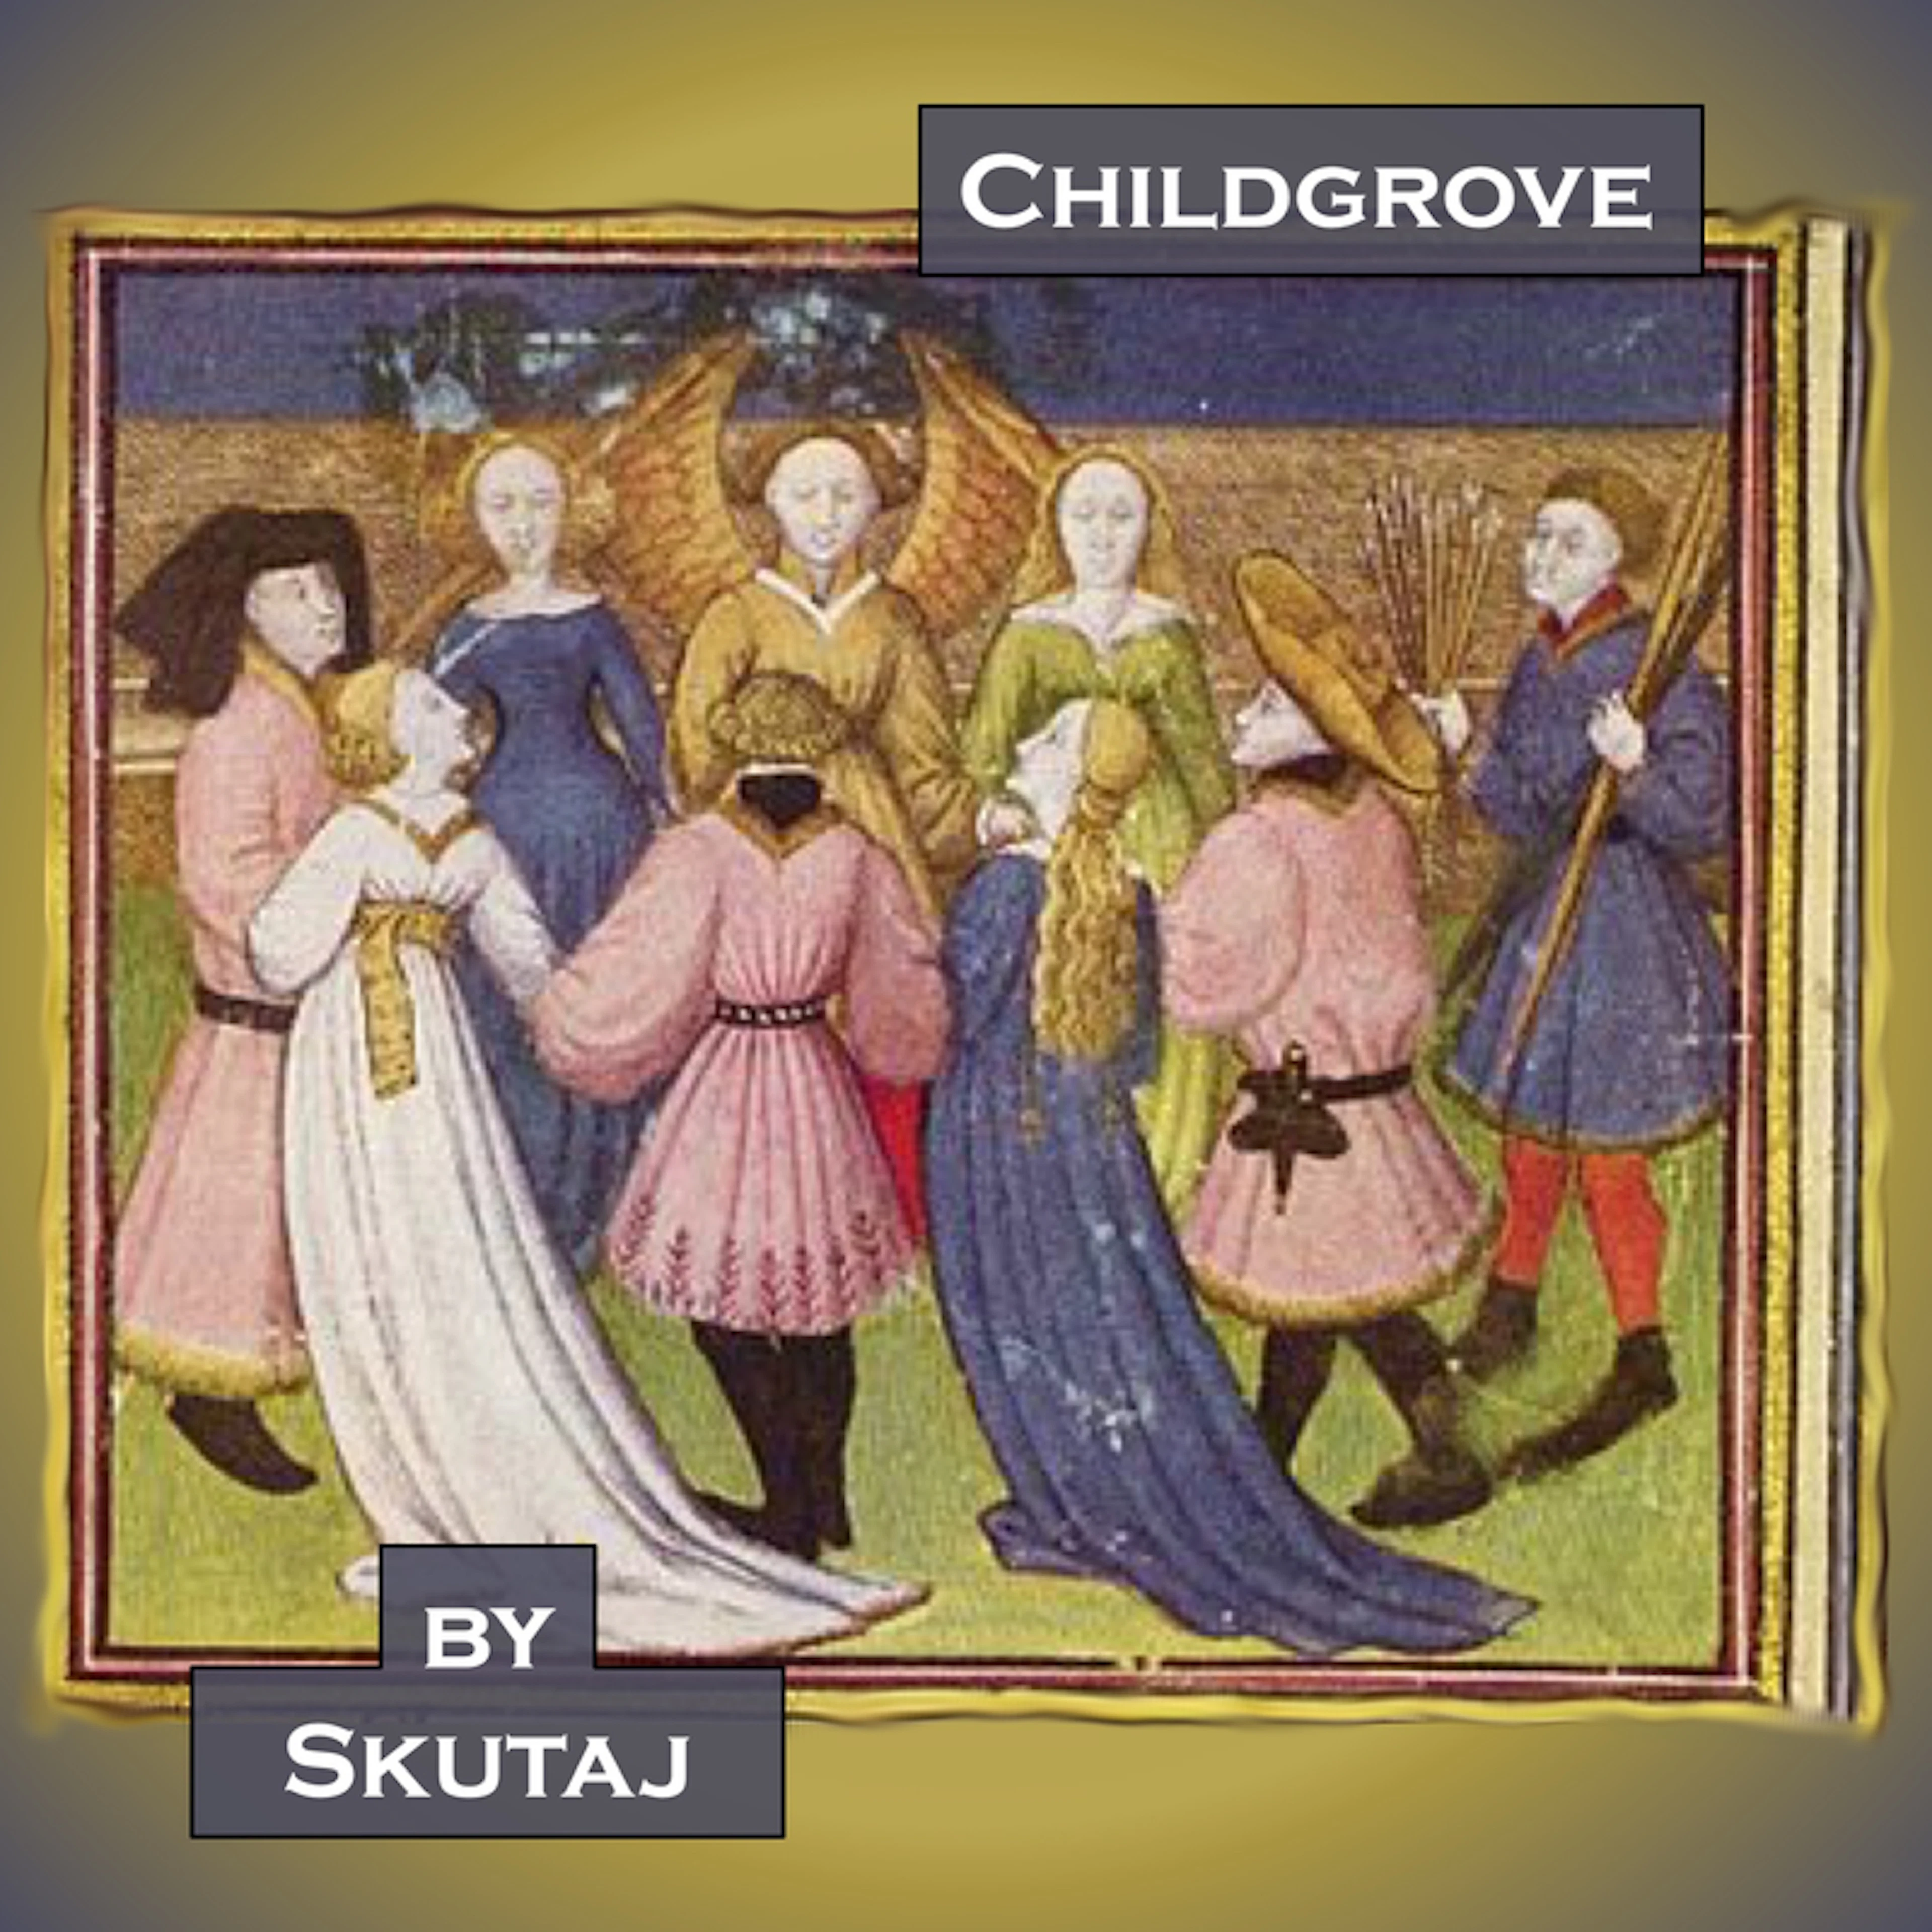 Childgrove audio track